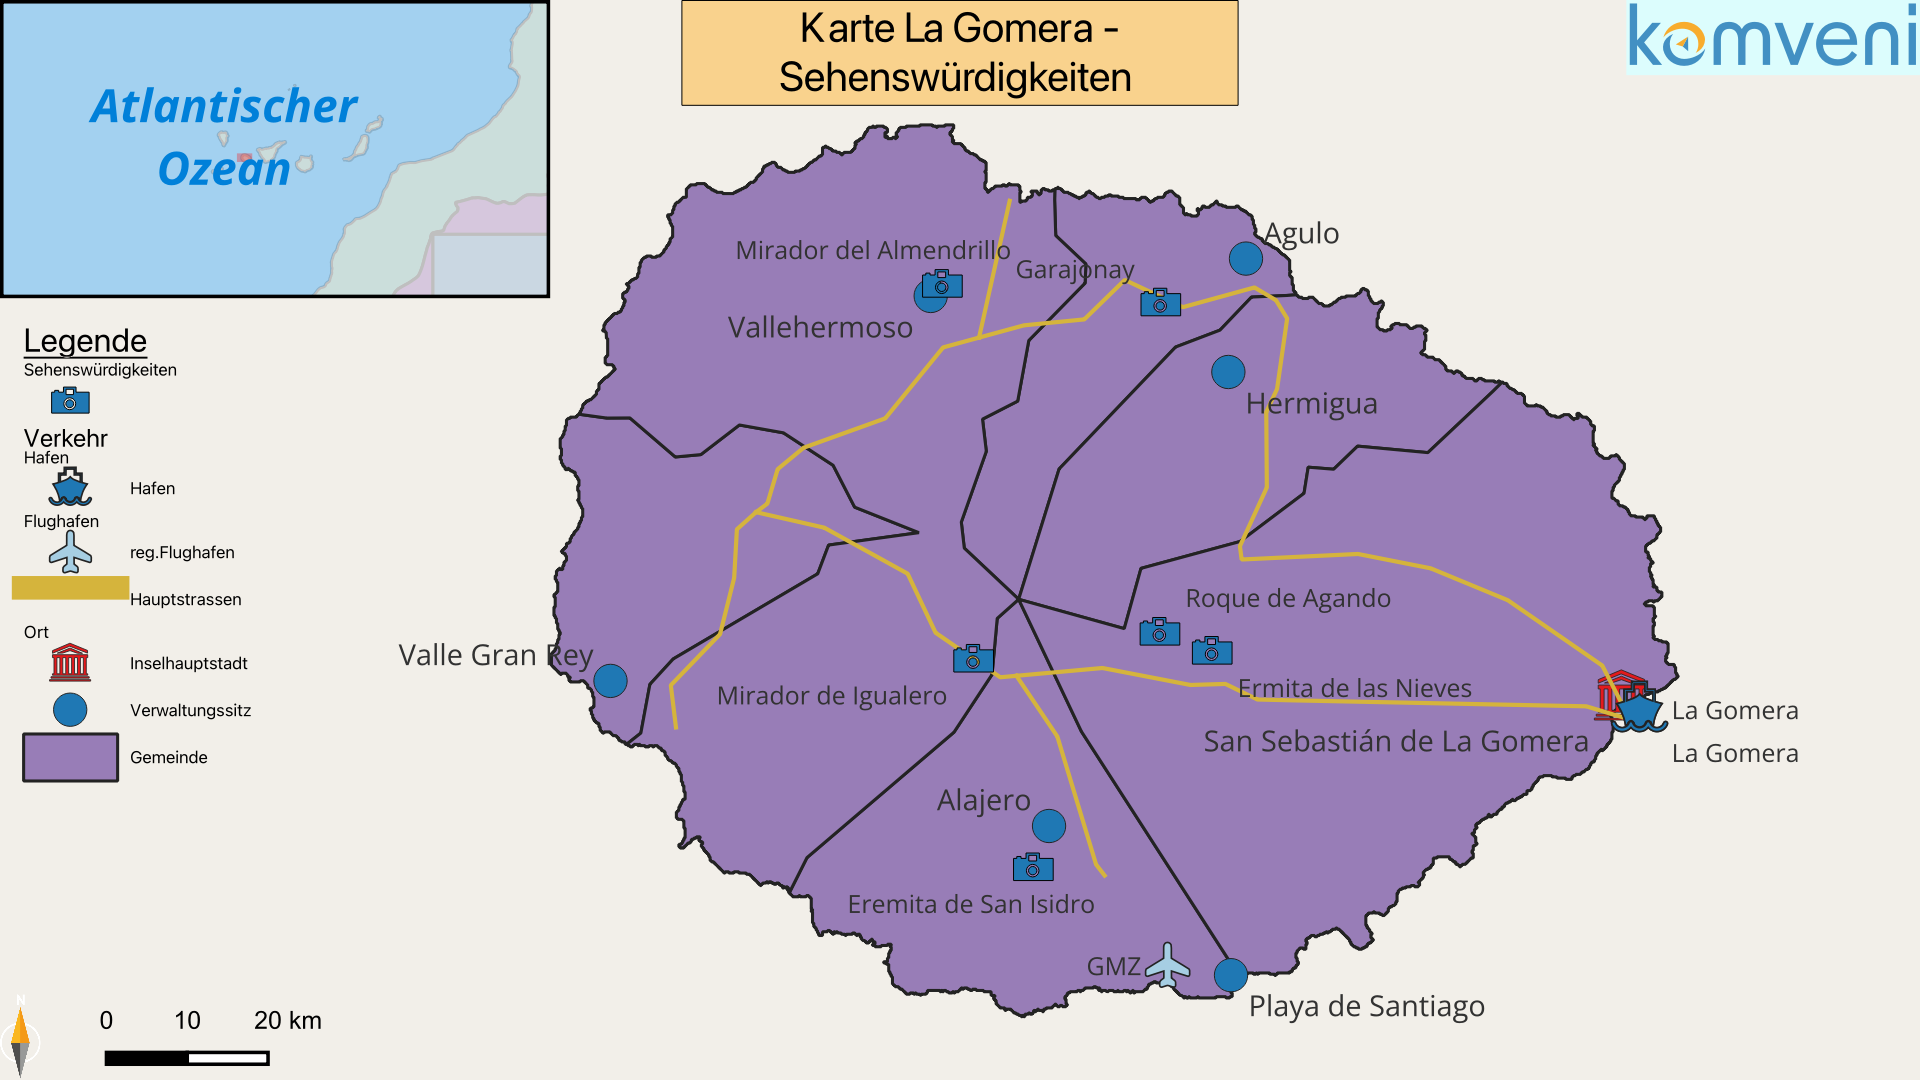 Karte La Gomera Sehenswuerdigkeiten